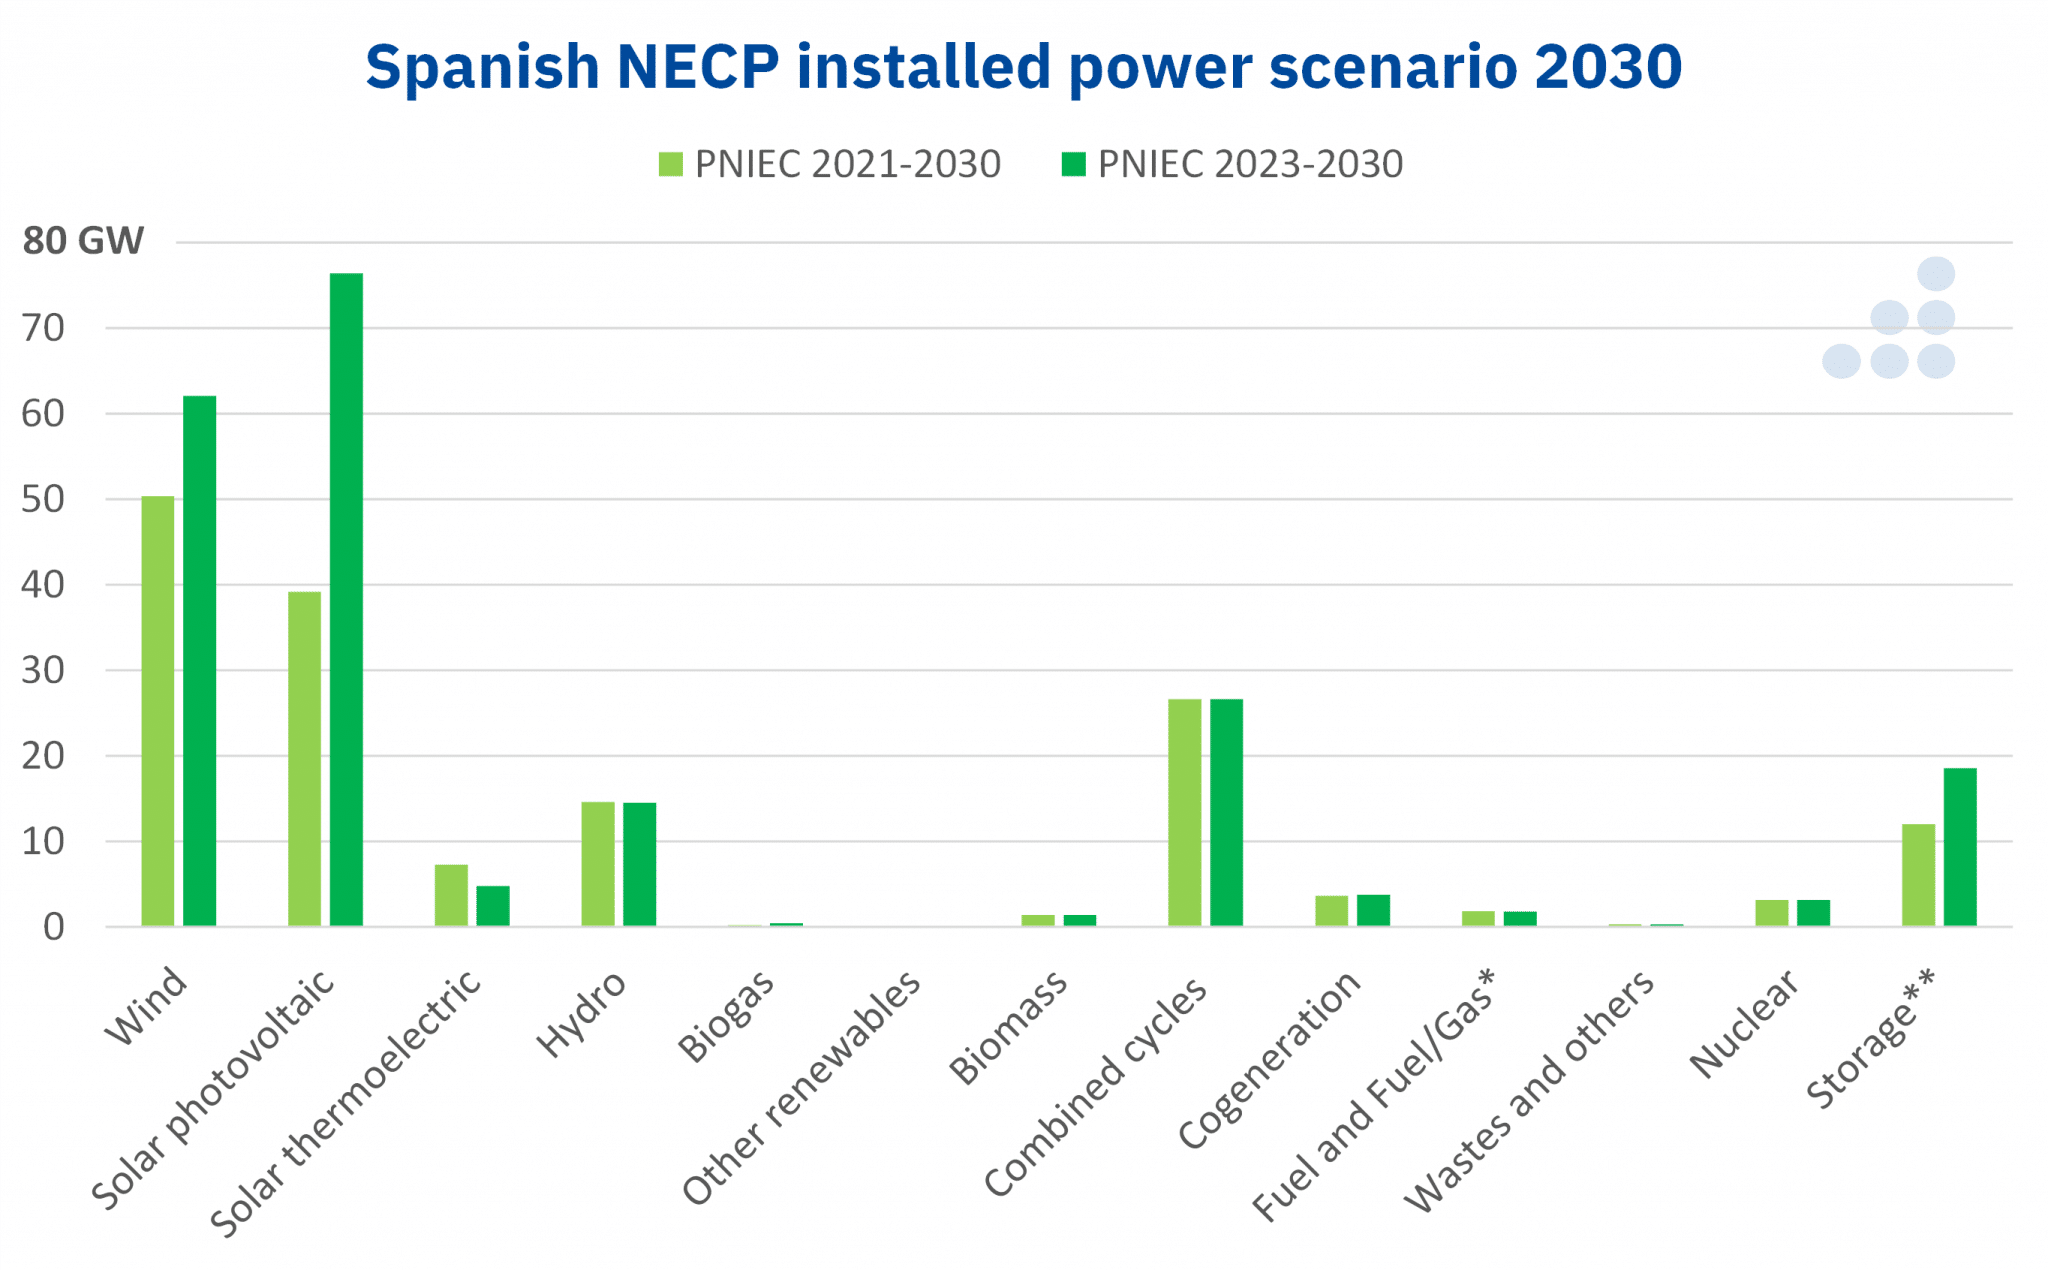 AleaSoft - Spanish NECP installed power scenario 2030